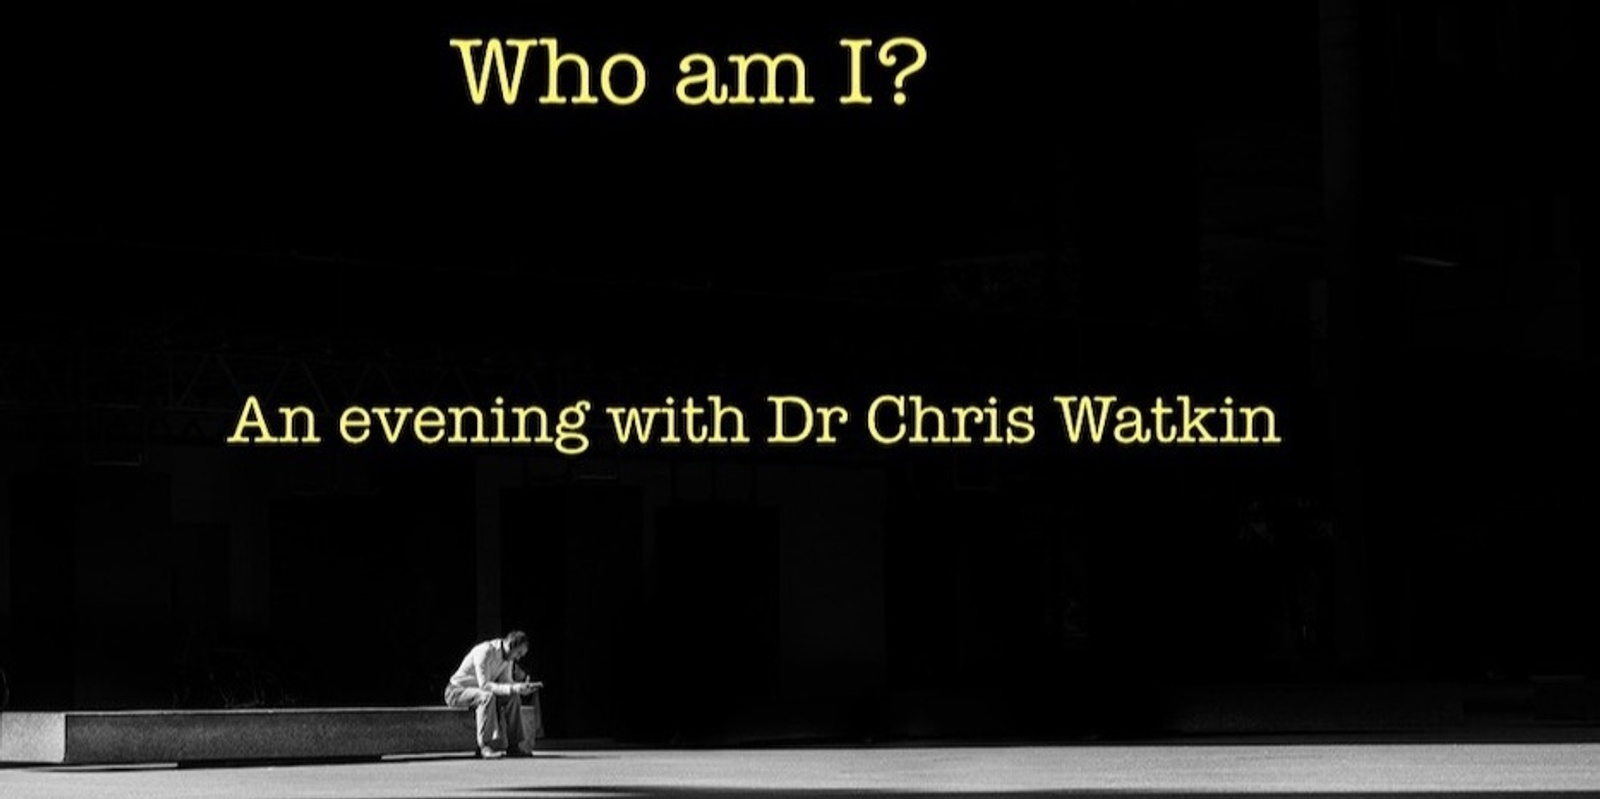 Who am I? An evening with Dr Chris Watkin